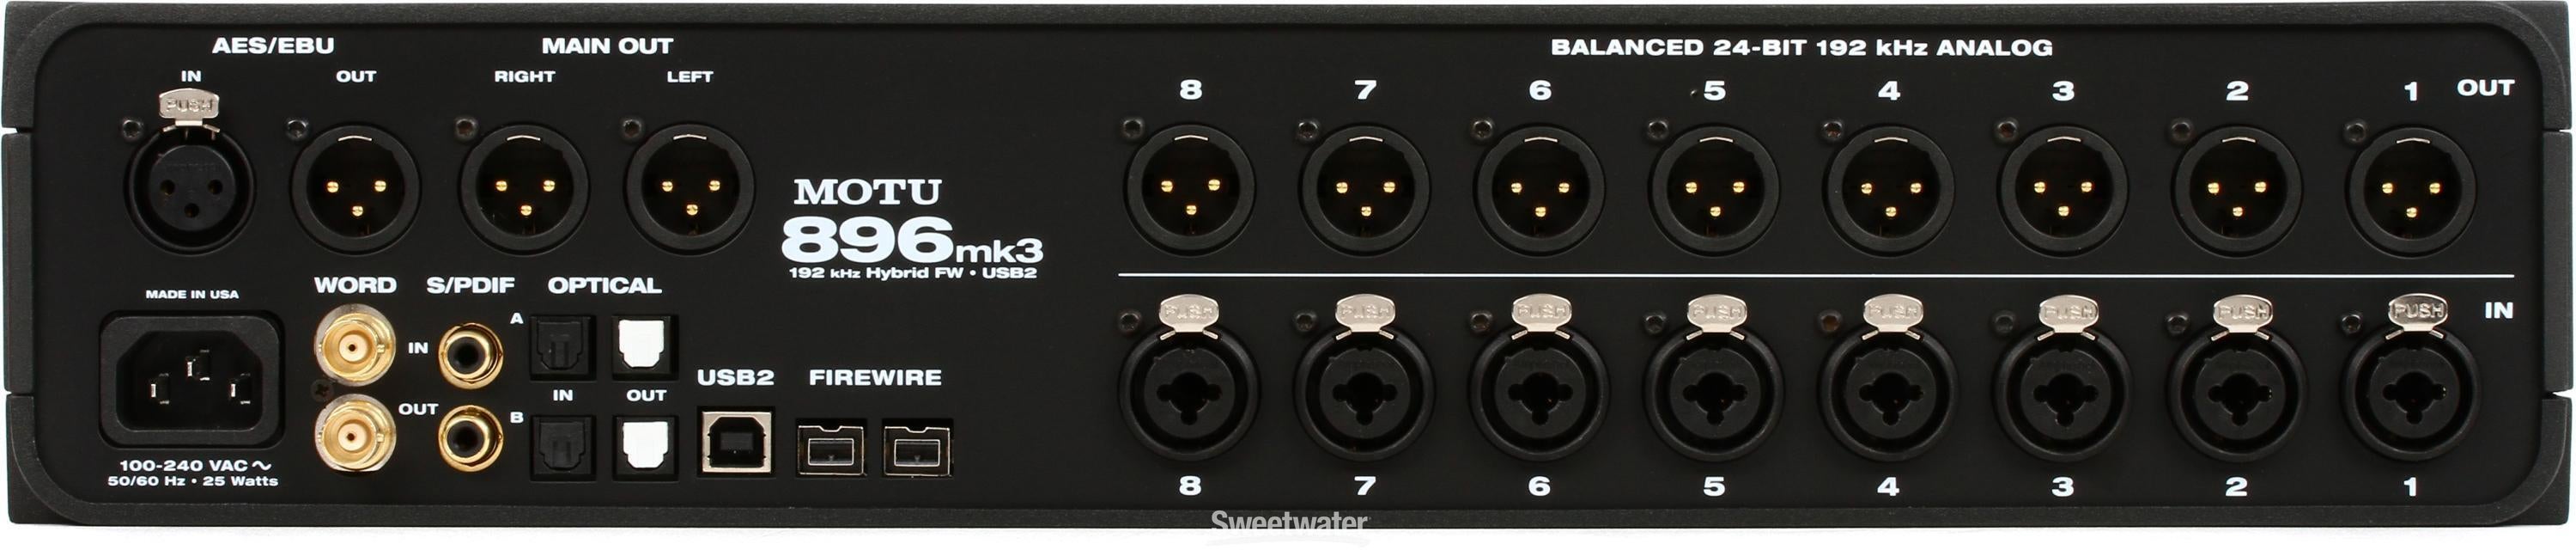 MOTU 896mk3 Hybrid USB / FireWire Audio Interface | Sweetwater